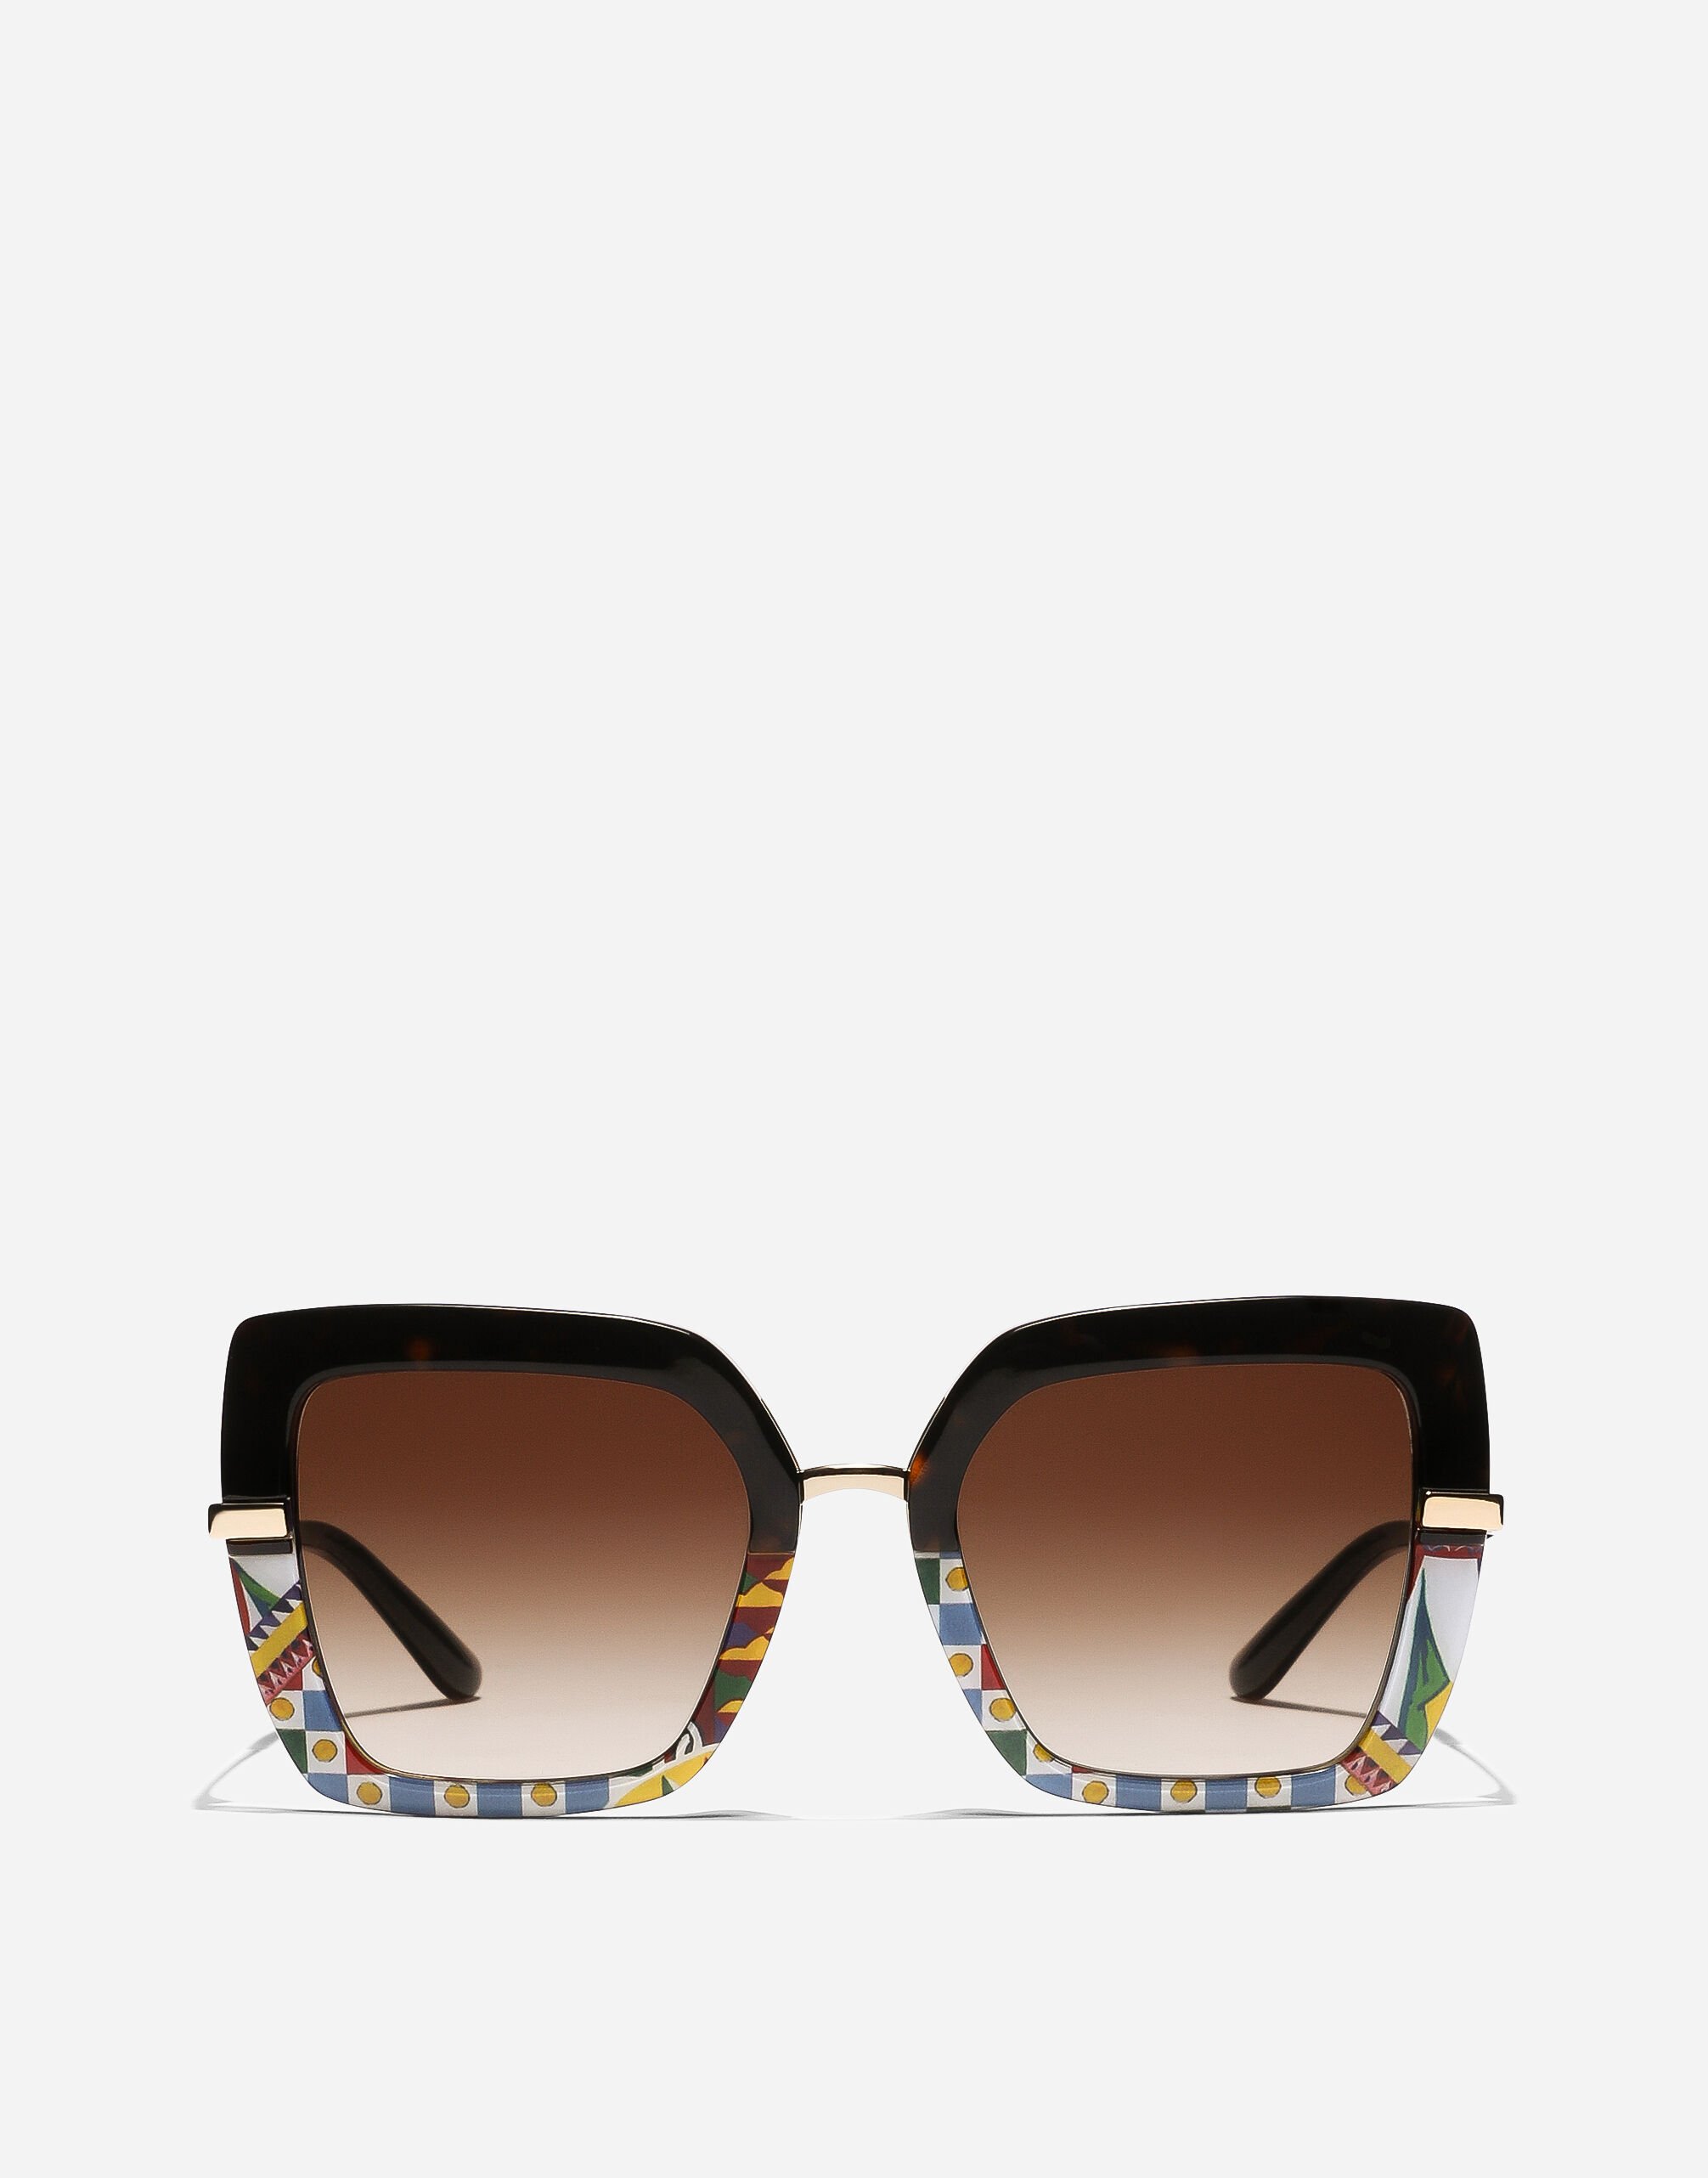 Dolce & Gabbana Half print sunglasses Black VG4439VP187